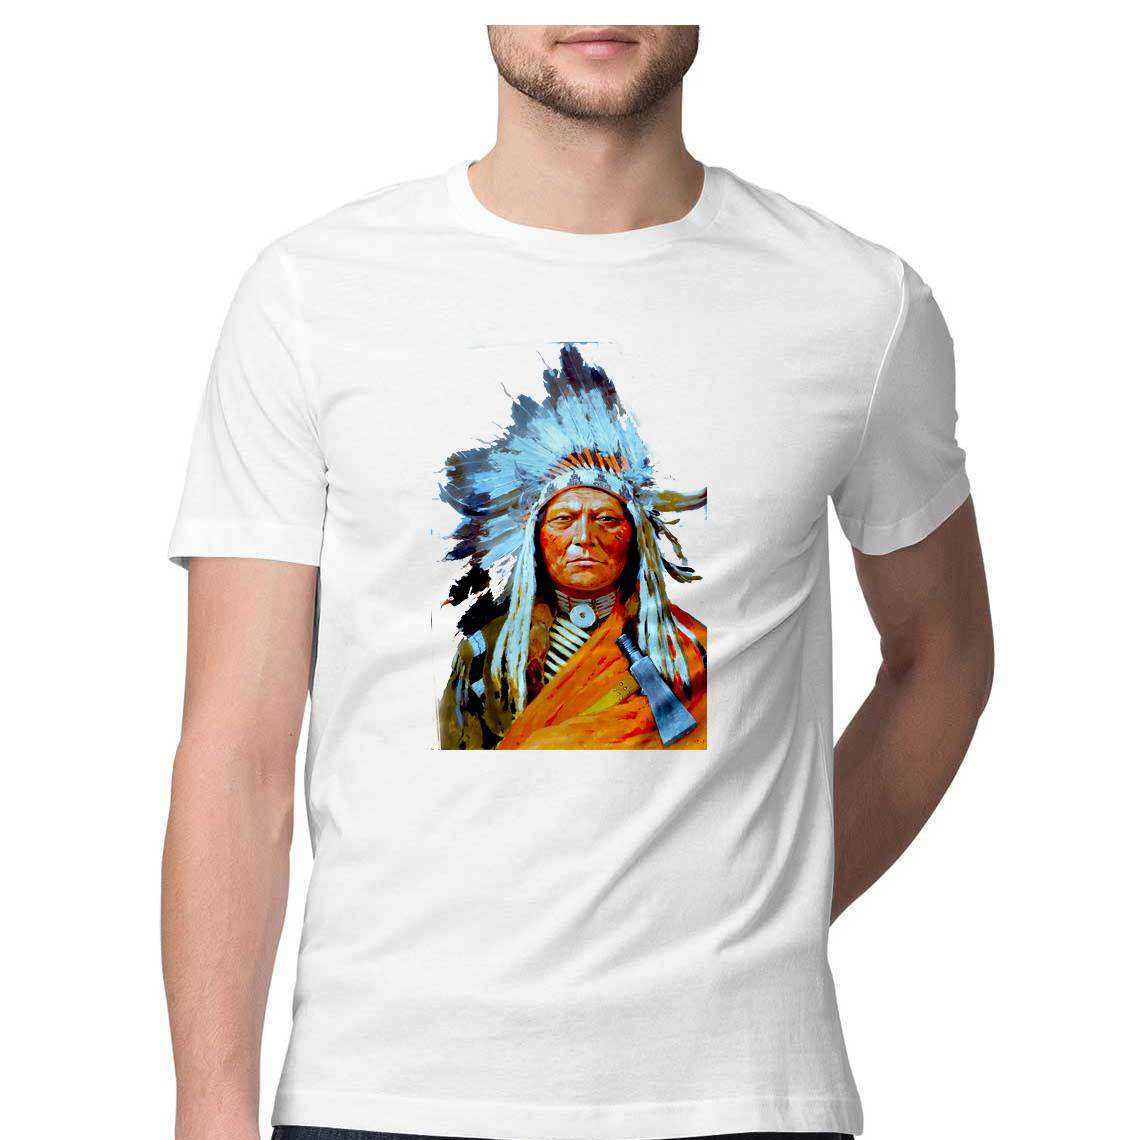 Sitting Bull by Henry Farny 1899 Men's T-Shirt - CBD Store India